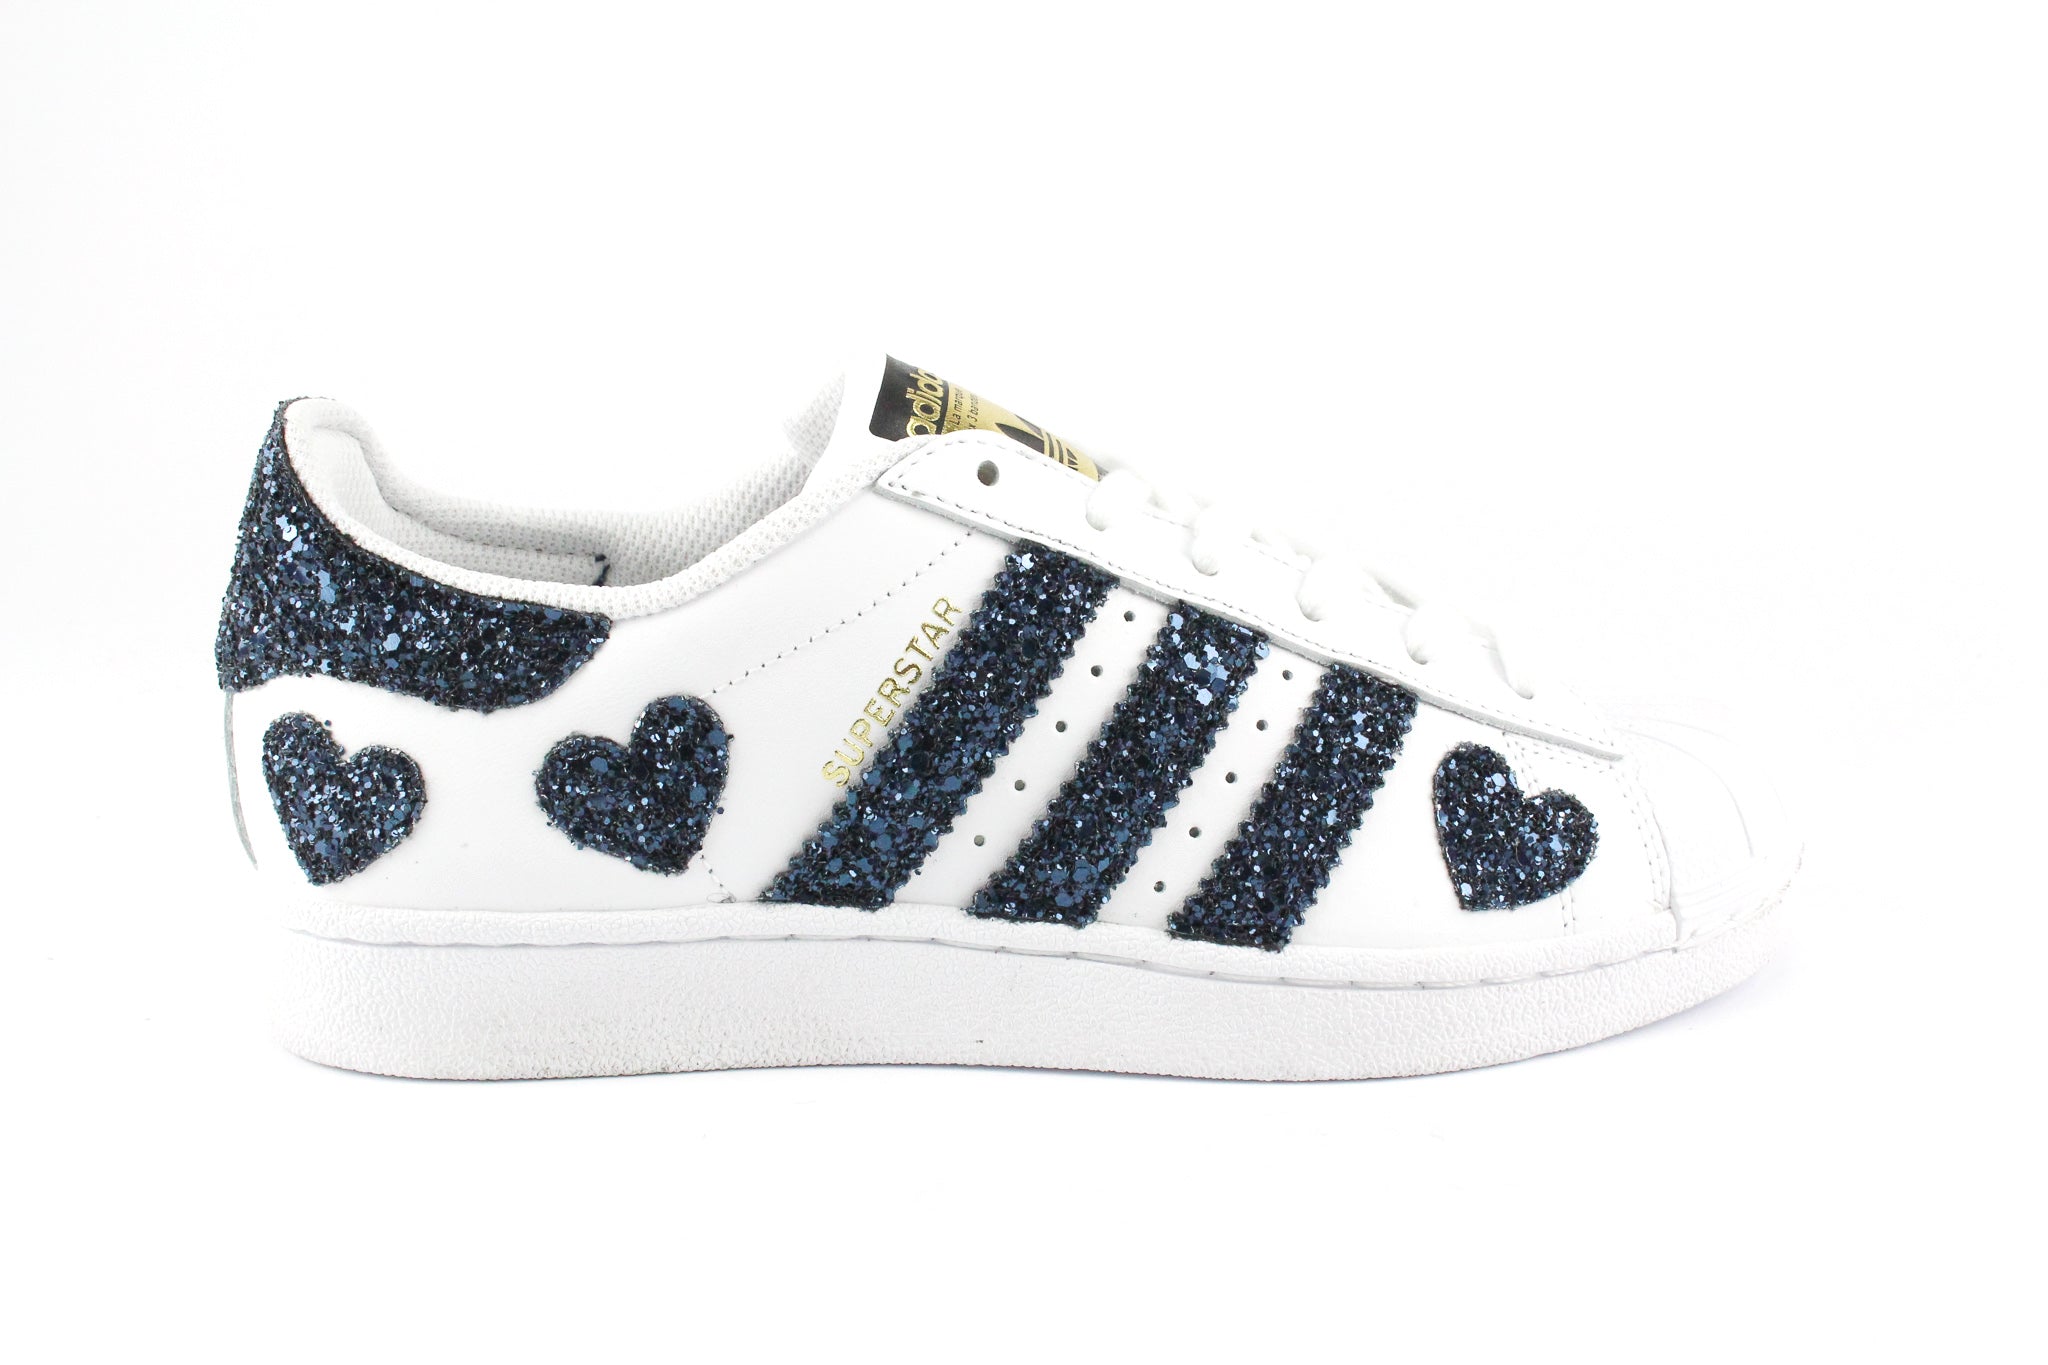 Adidas Superstar Cuori Navy Glitter